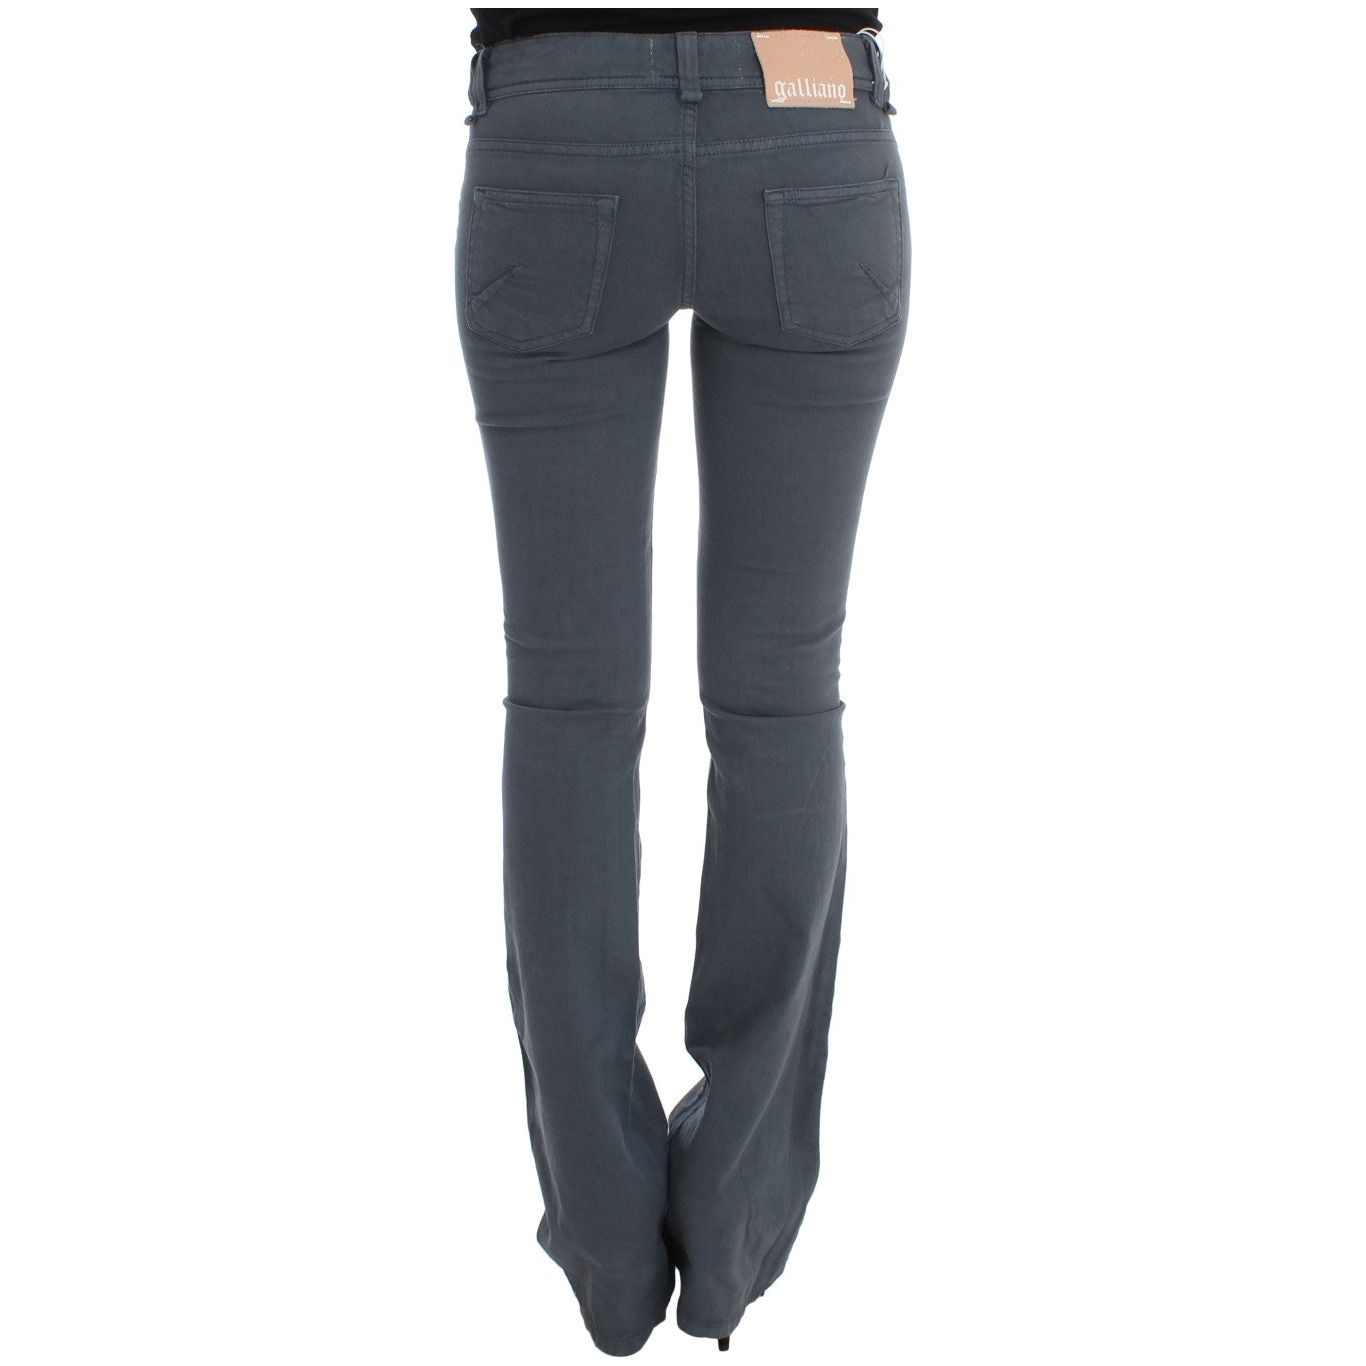 John Galliano Elegant Slim Fit Bootcut Jeans blue-cotton-blend-slim-fit-bootcut-jeans-2 Jeans & Pants 330188-blue-cotton-blend-slim-fit-bootcut-jeans-3-2.jpg